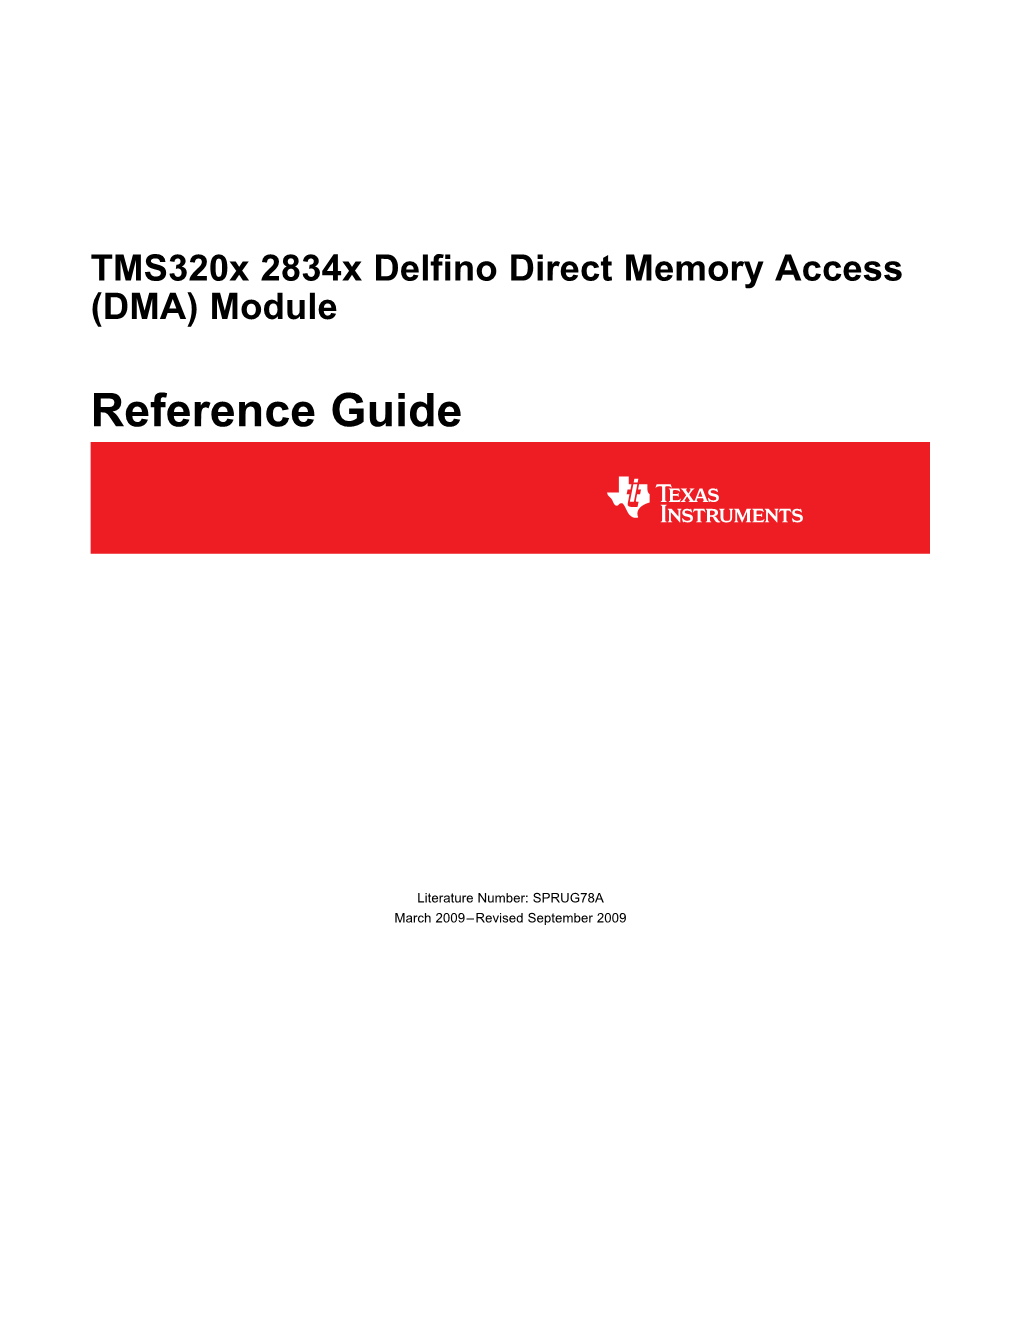 Tms320x2834x Delfino Direct Memory Access (DMA) Reference Guide